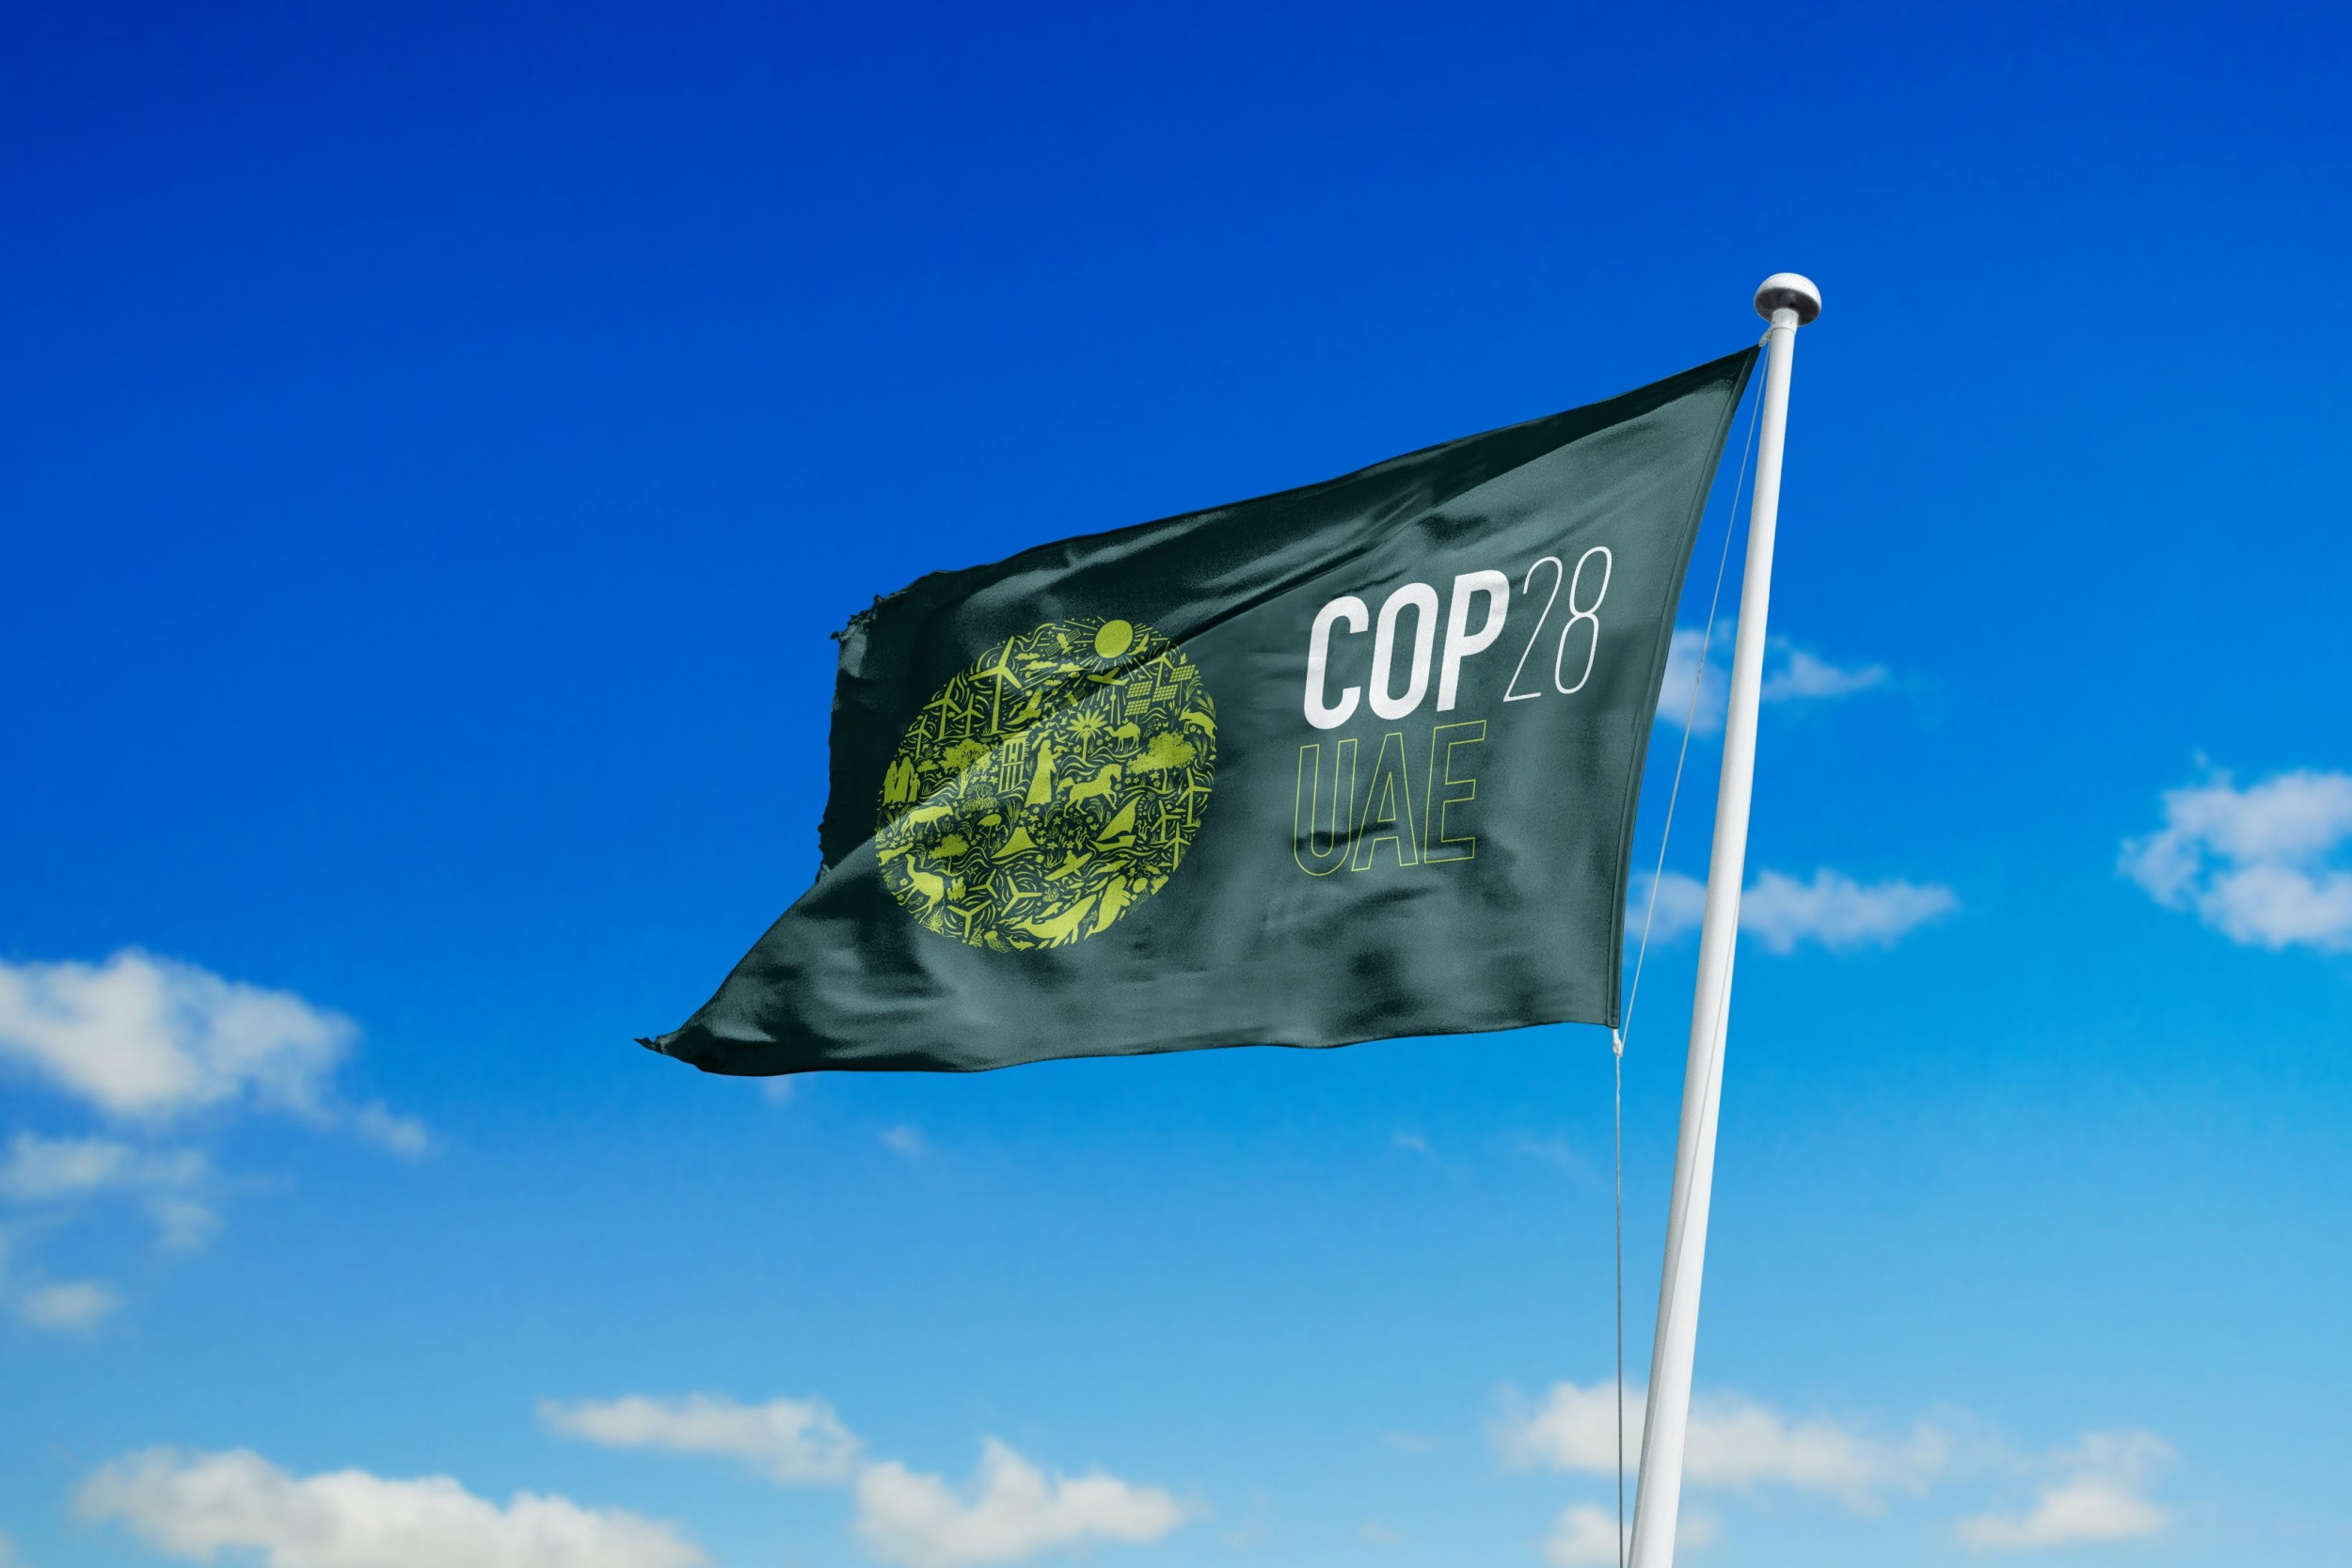 COP28, fot. Shutterstock